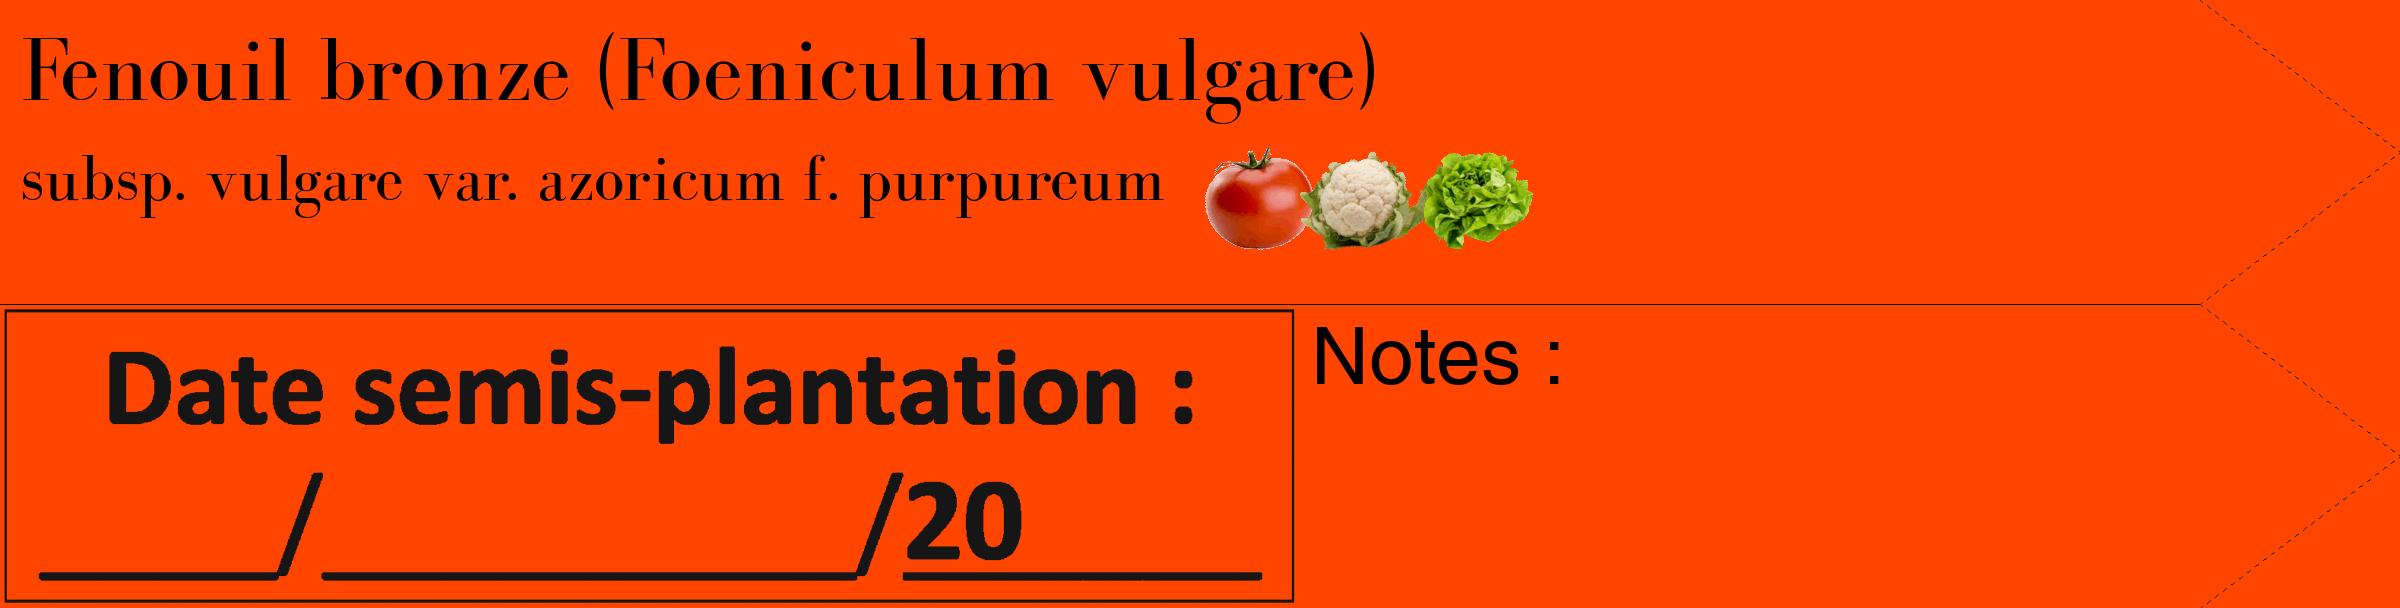 Étiquette de : Foeniculum vulgare subsp. vulgare var. azoricum f. purpureum - format c - style noire26_simple_simplebod avec comestibilité simplifiée